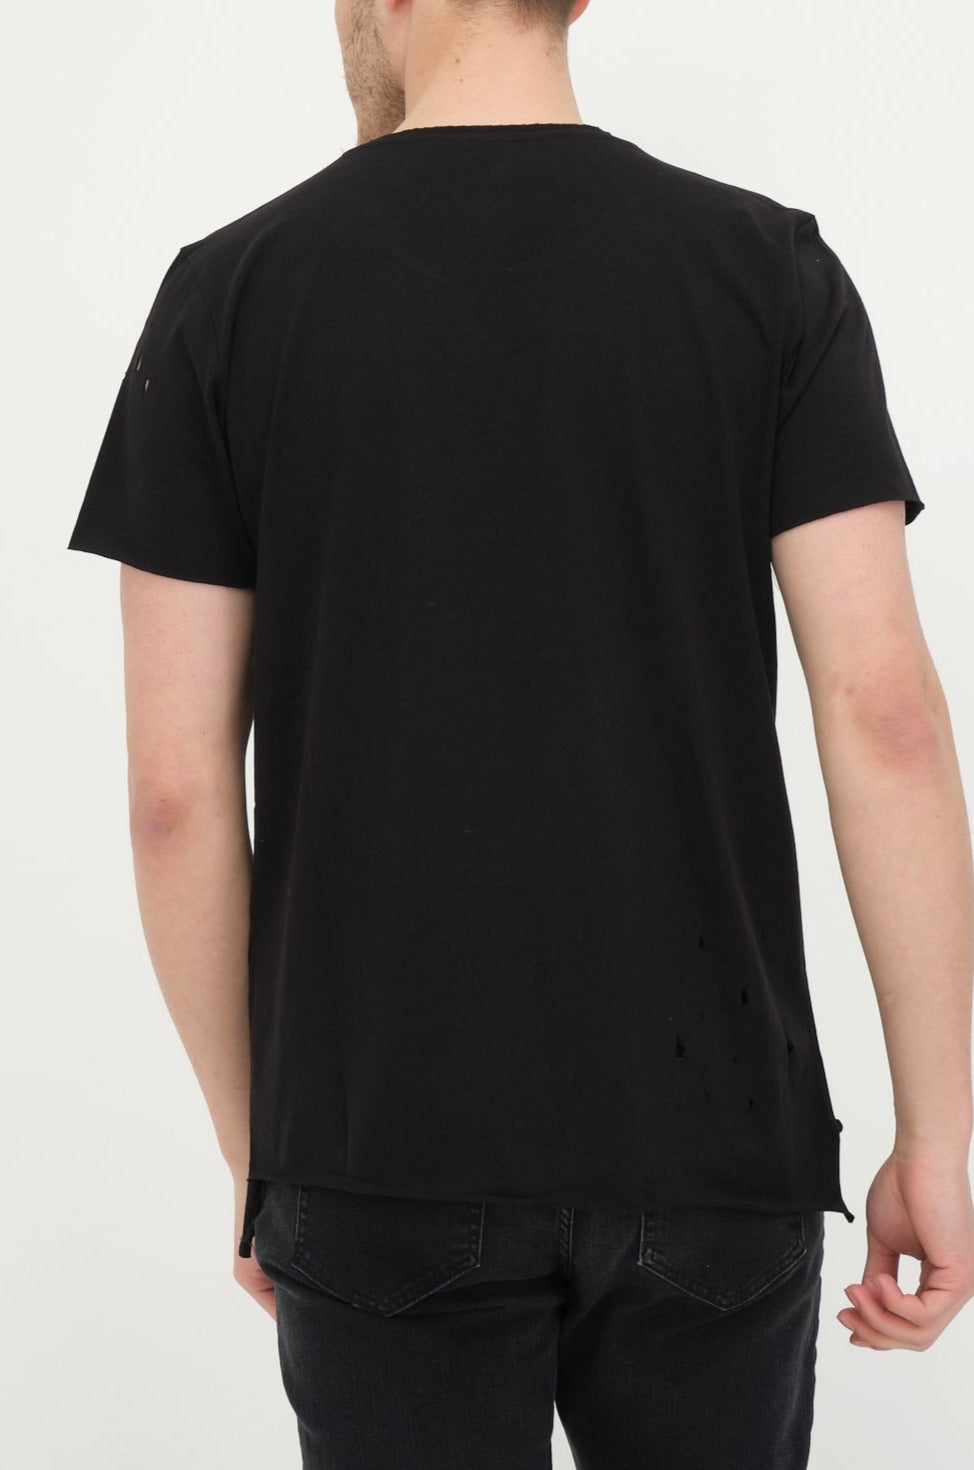 N° 8193 T-Shirt - Black - Ron Tomson